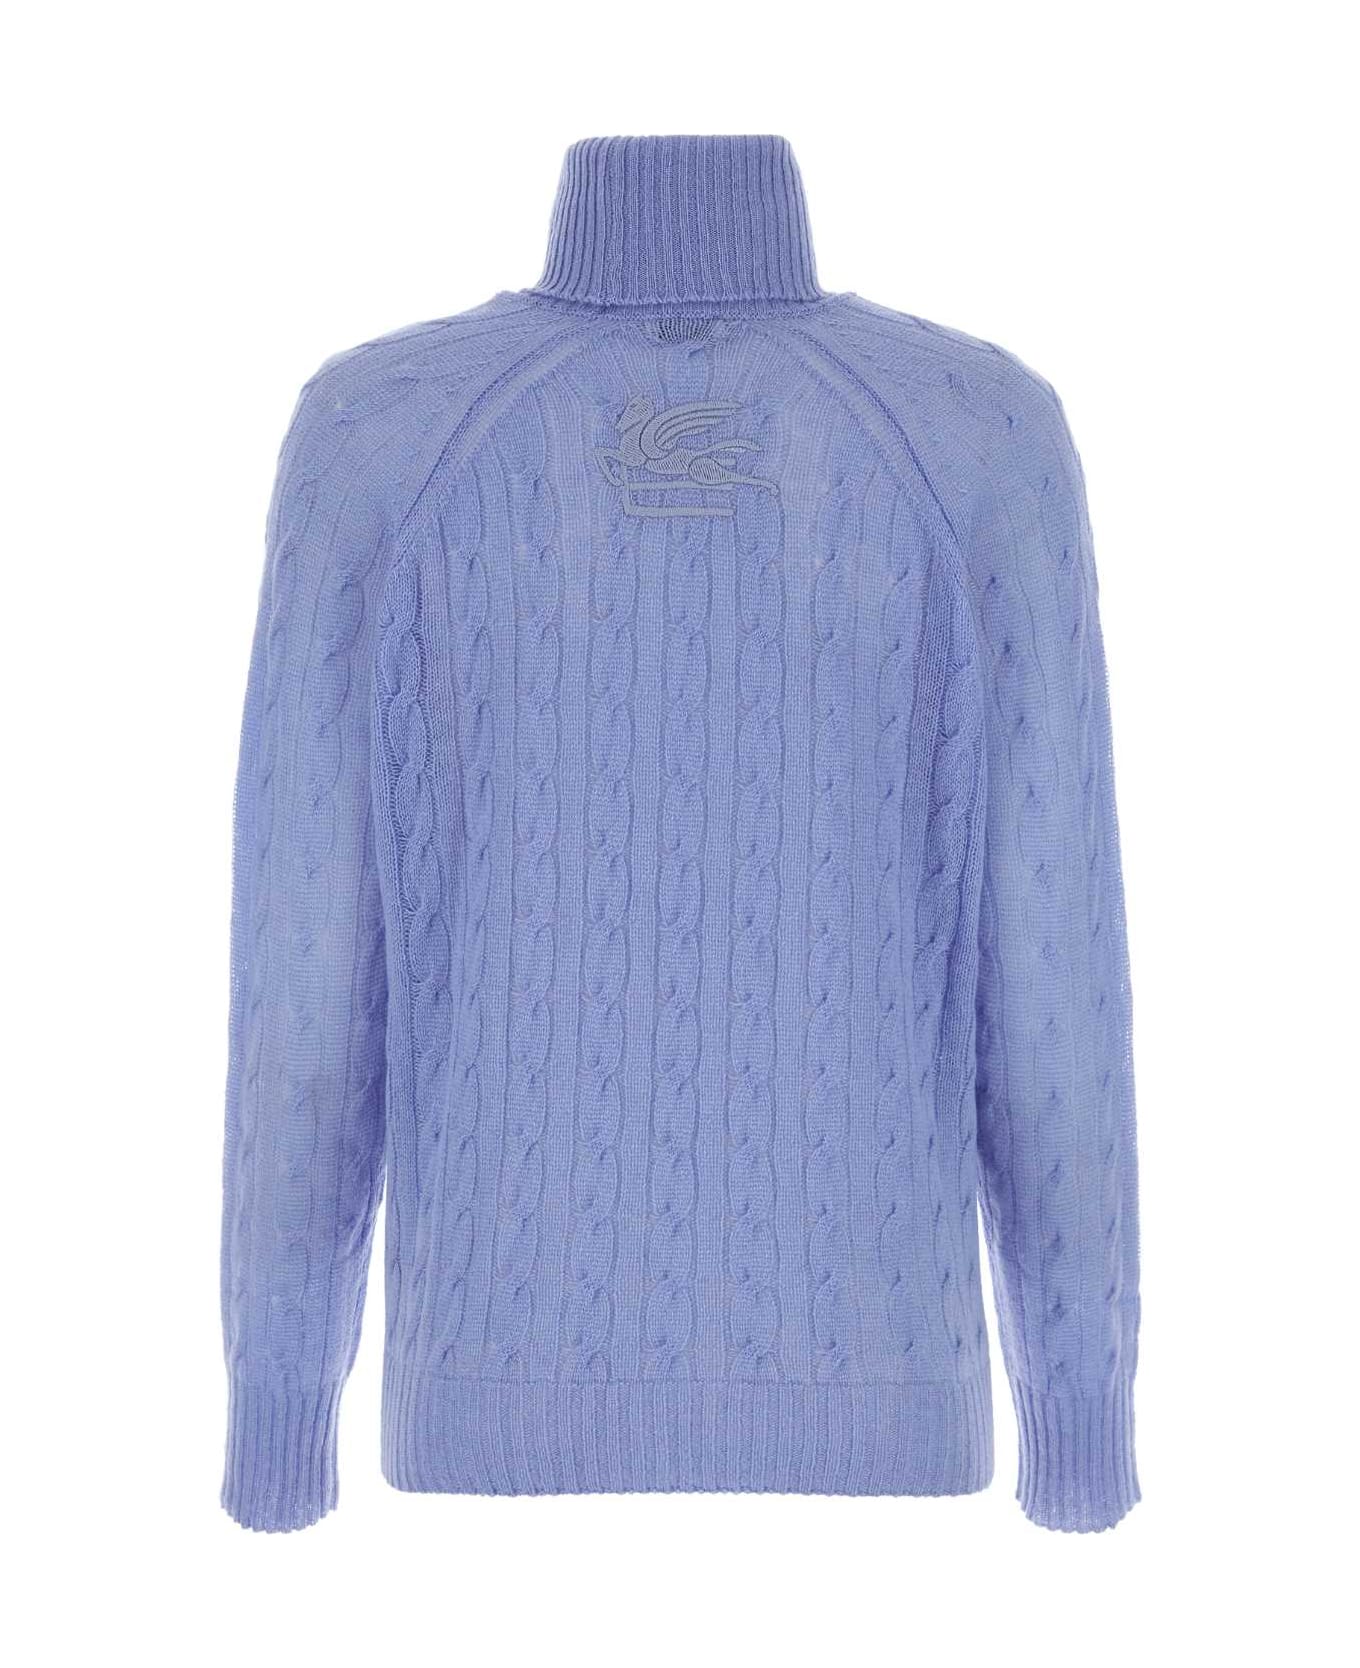 Etro Powder Blue Cashmere Sweater - LIGHTBLU